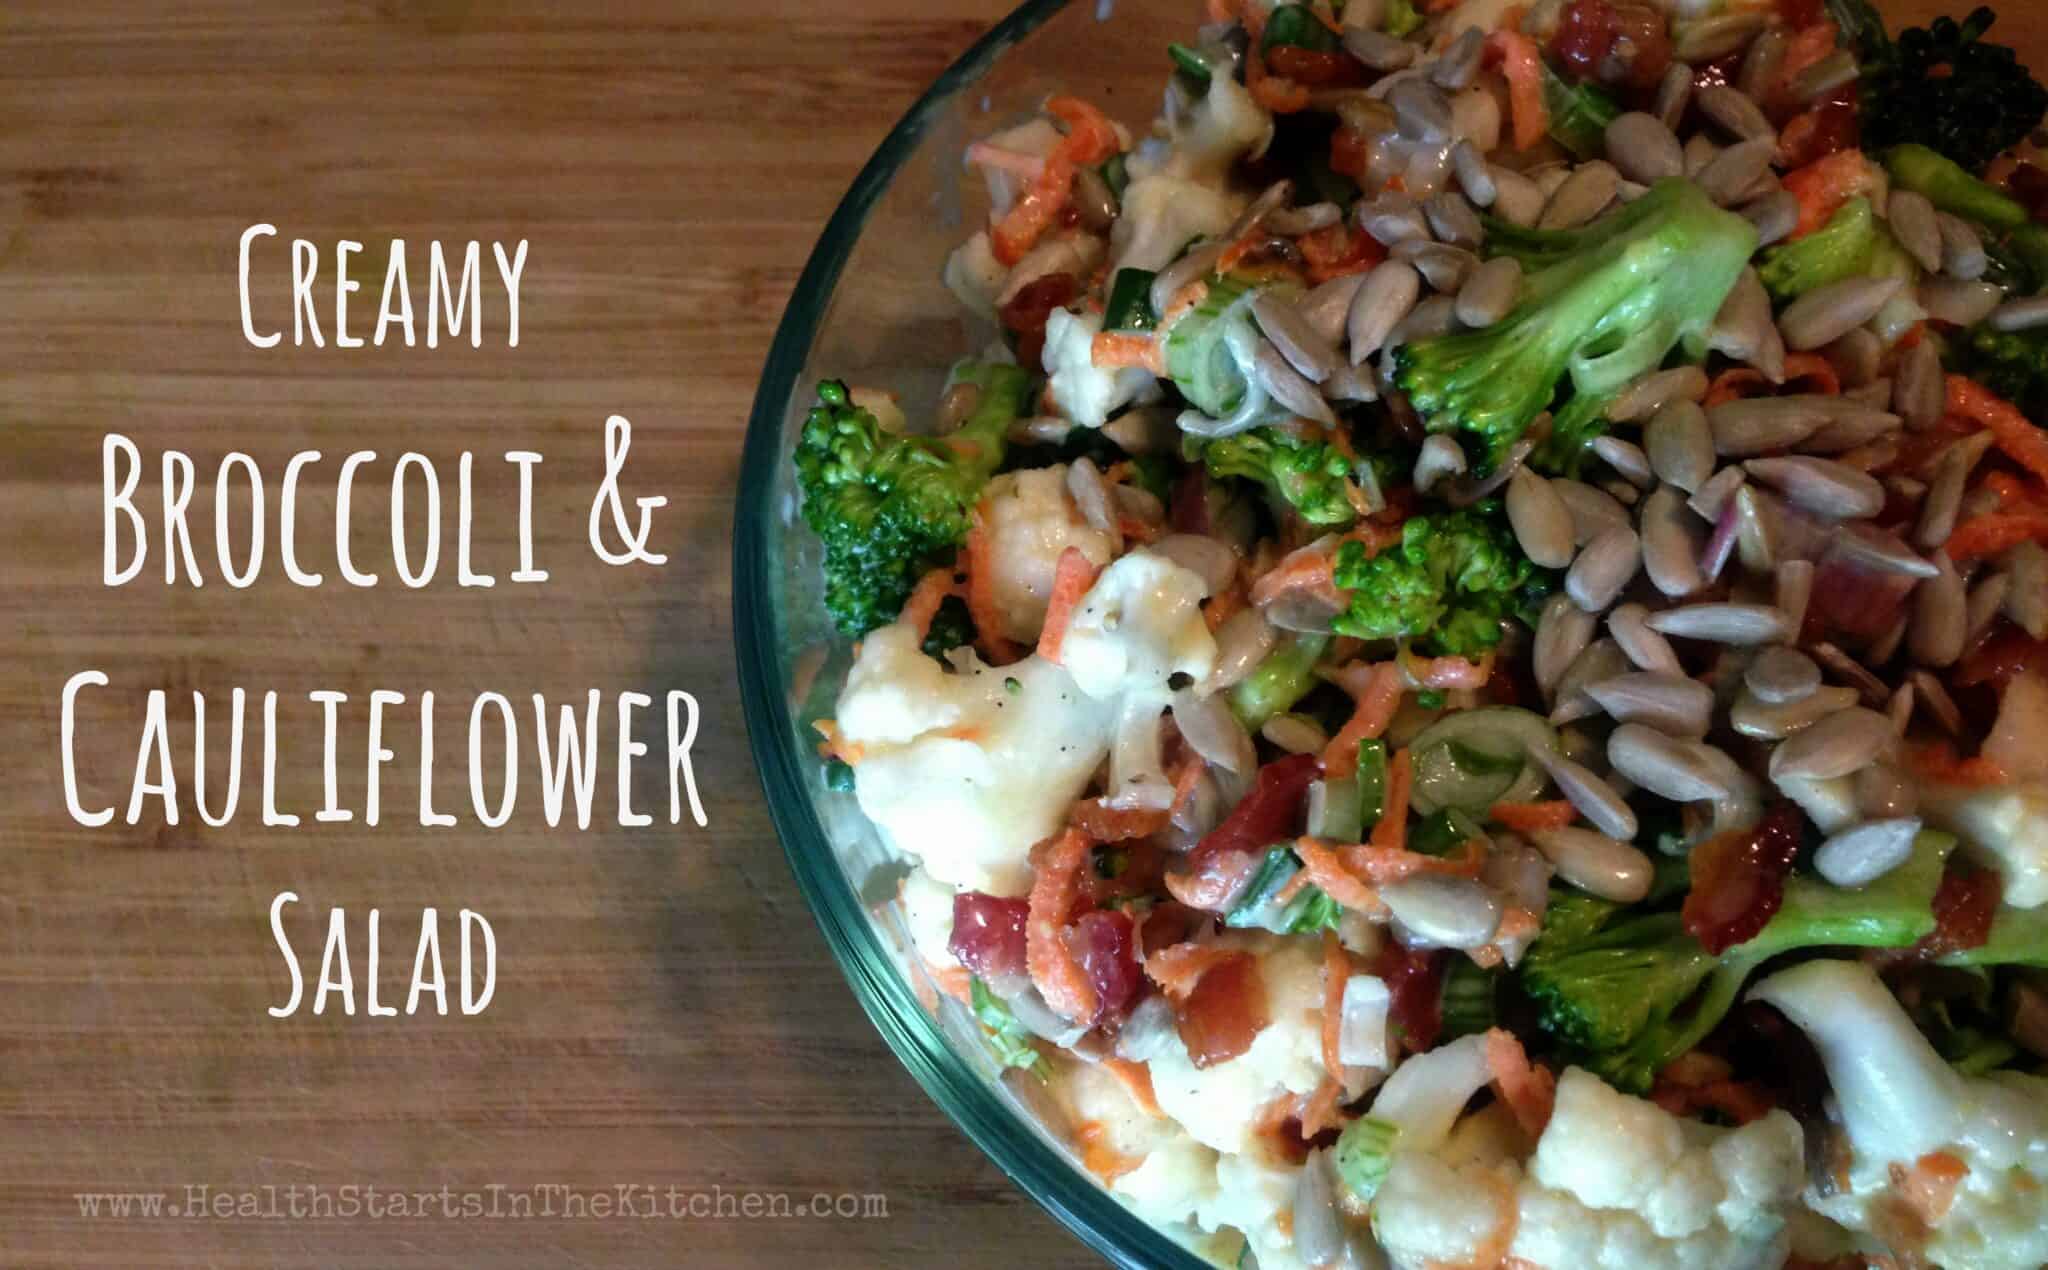 Creamy Broccoli & Cauliflower Salad